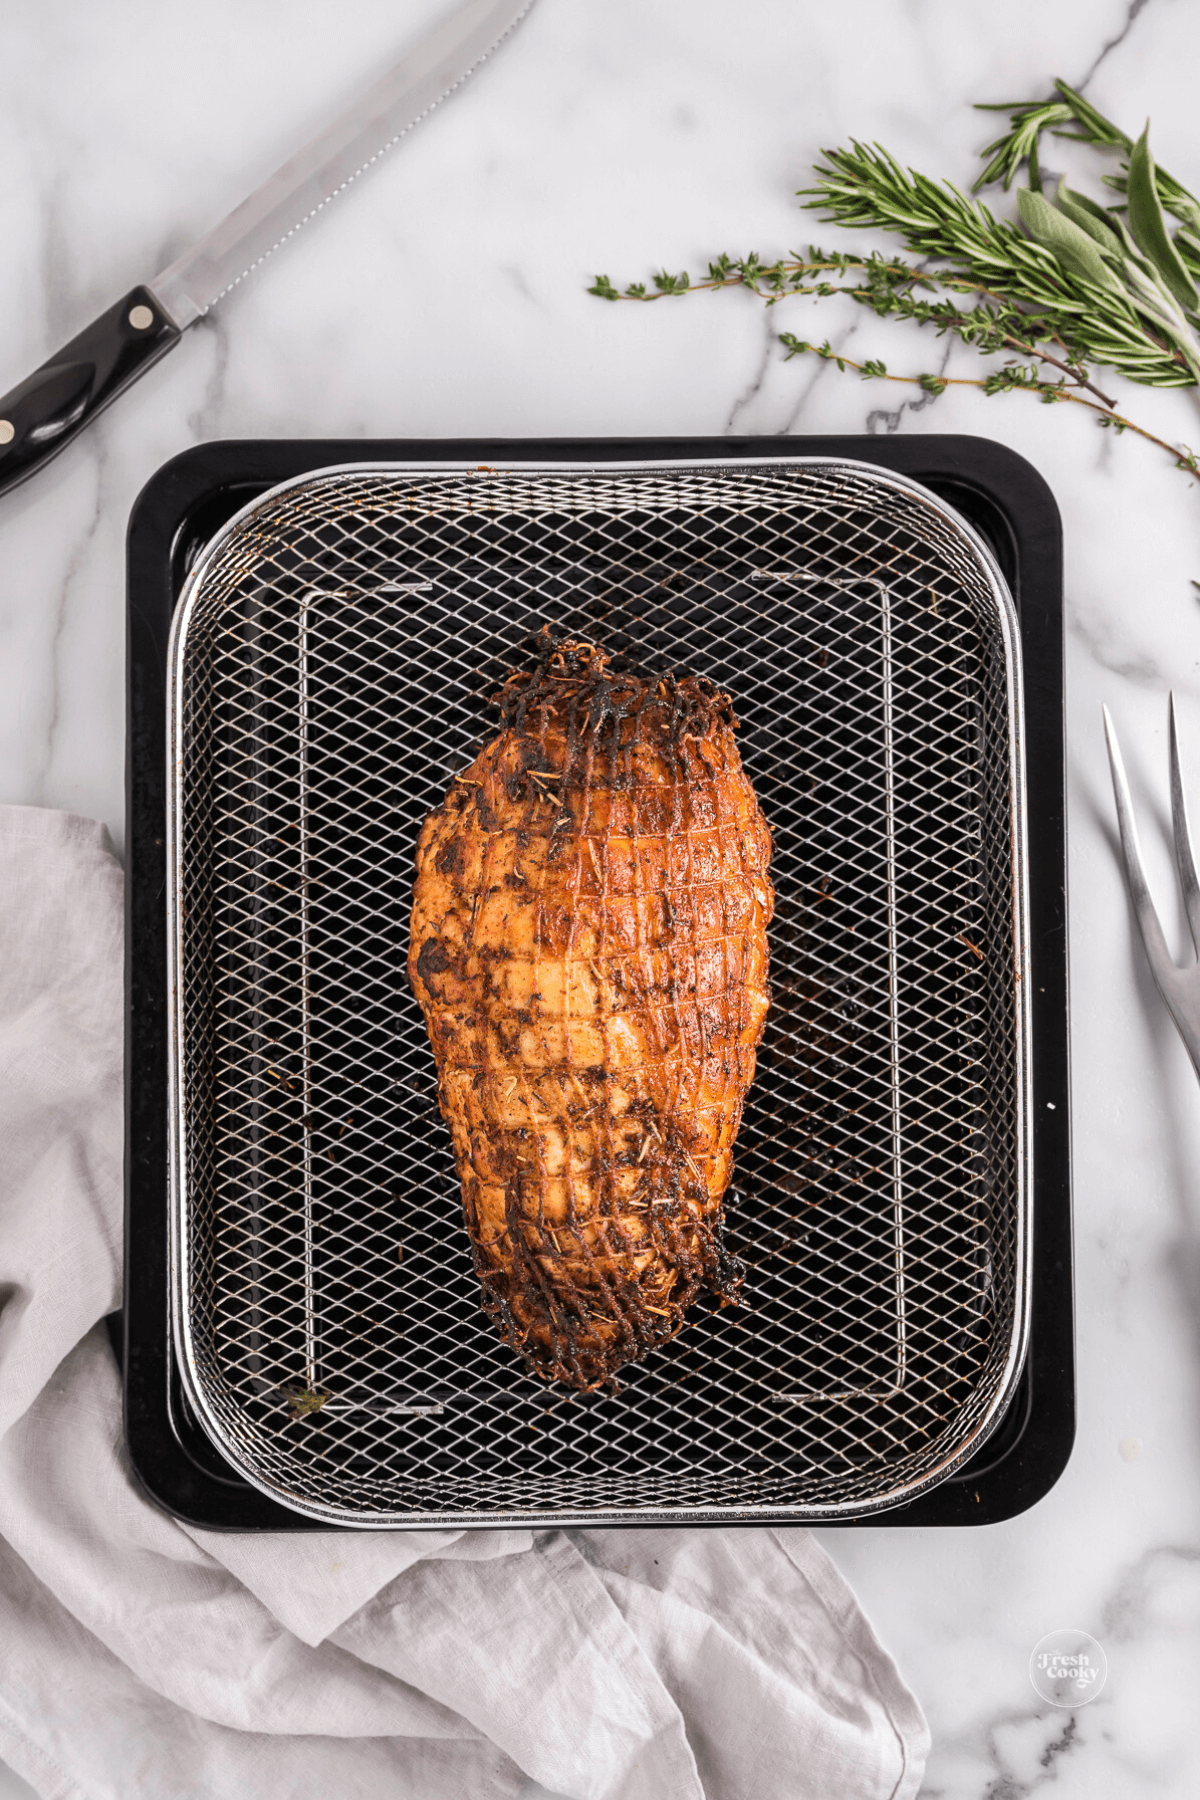 Finished roasted turkey breast on air fryer basket.